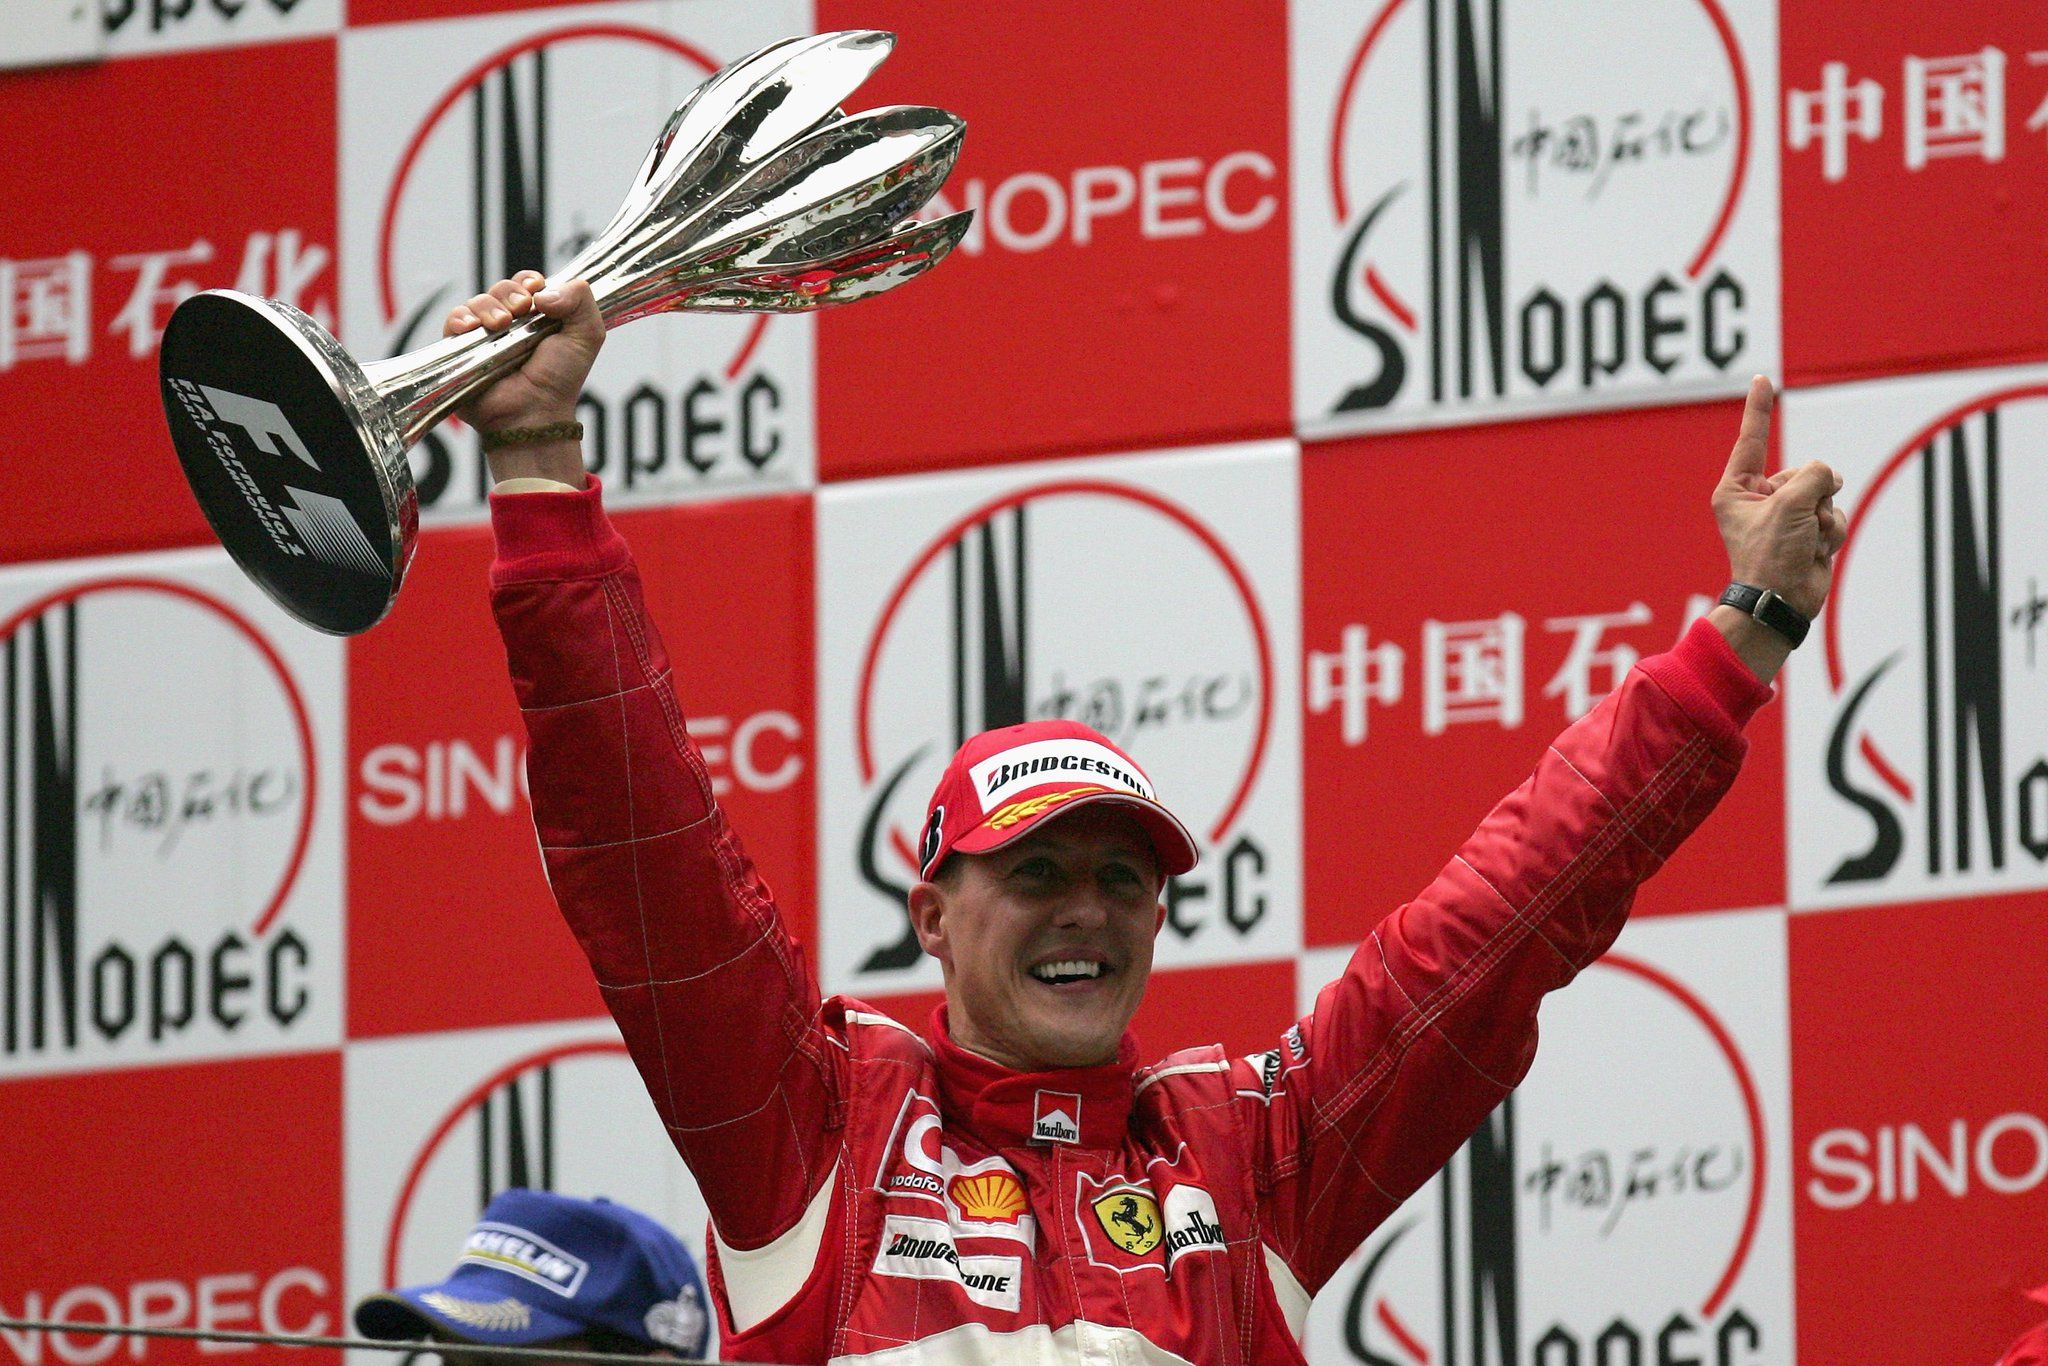 Momen Michael Schumacher merayakan kemenangan dalam sebuah balapan F1.